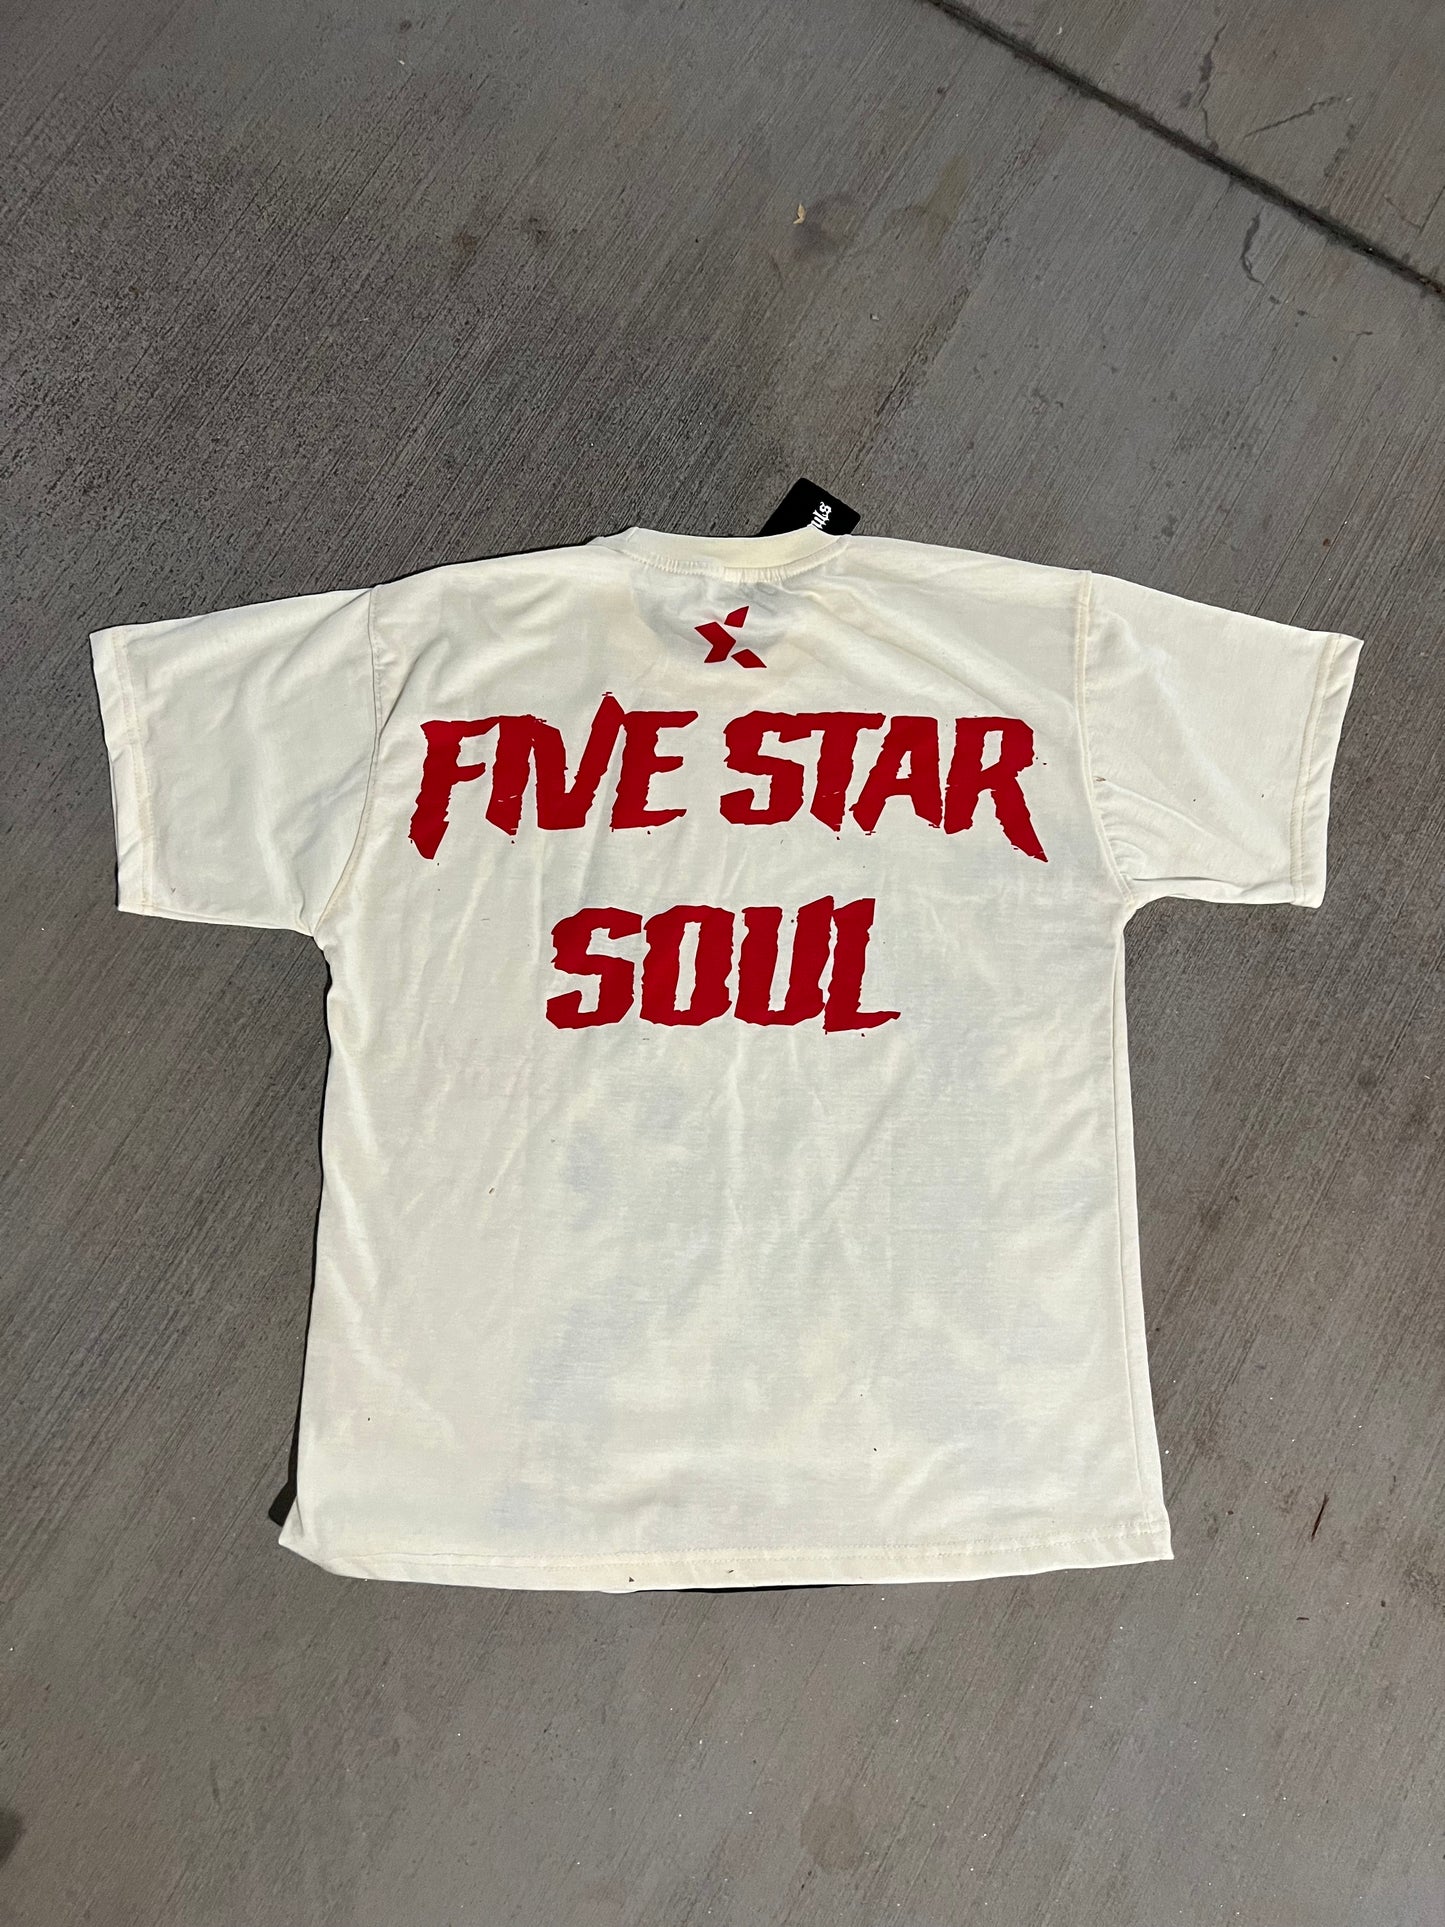 "Five Star Soul" Tee